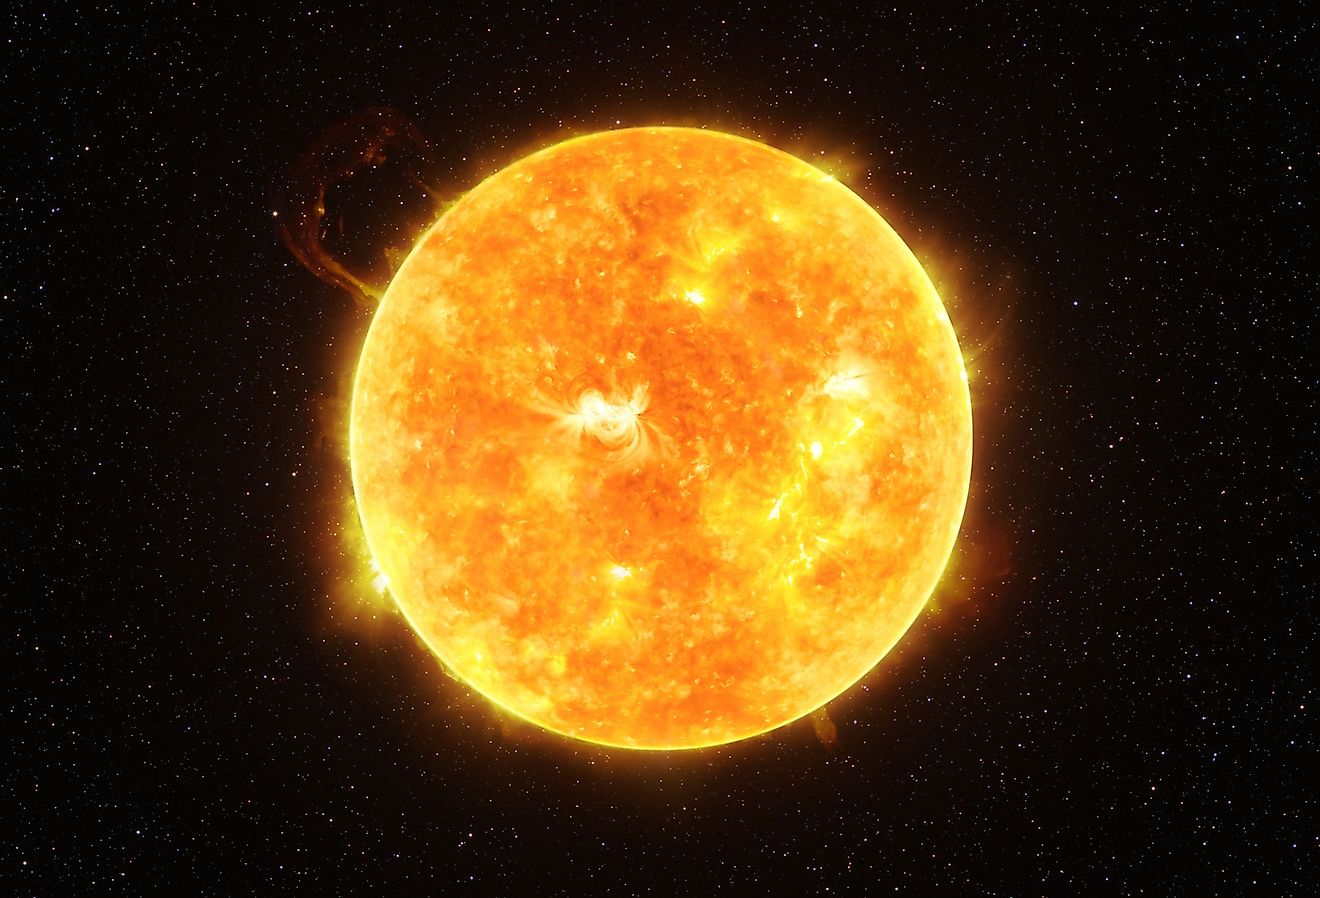 Bright Sun against dark starry sky in the Solar System.